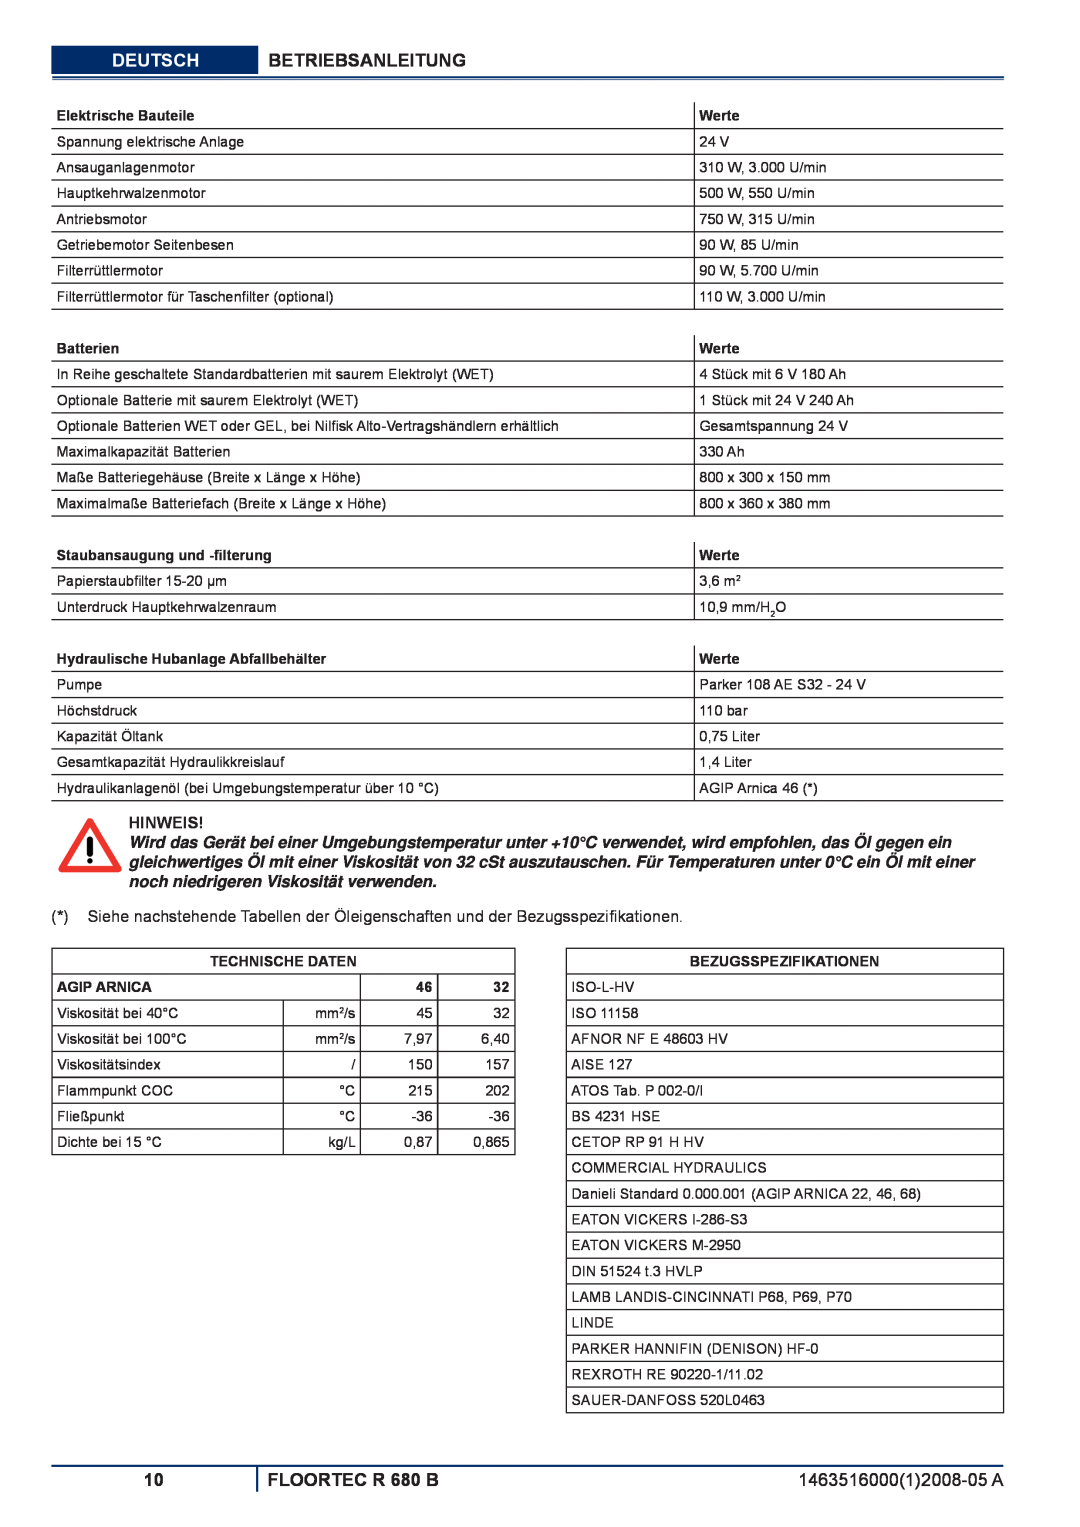 Nilfisk-ALTO manuel dutilisation Deutsch, Betriebsanleitung, FLOORTEC R 680 B, Hinweis 